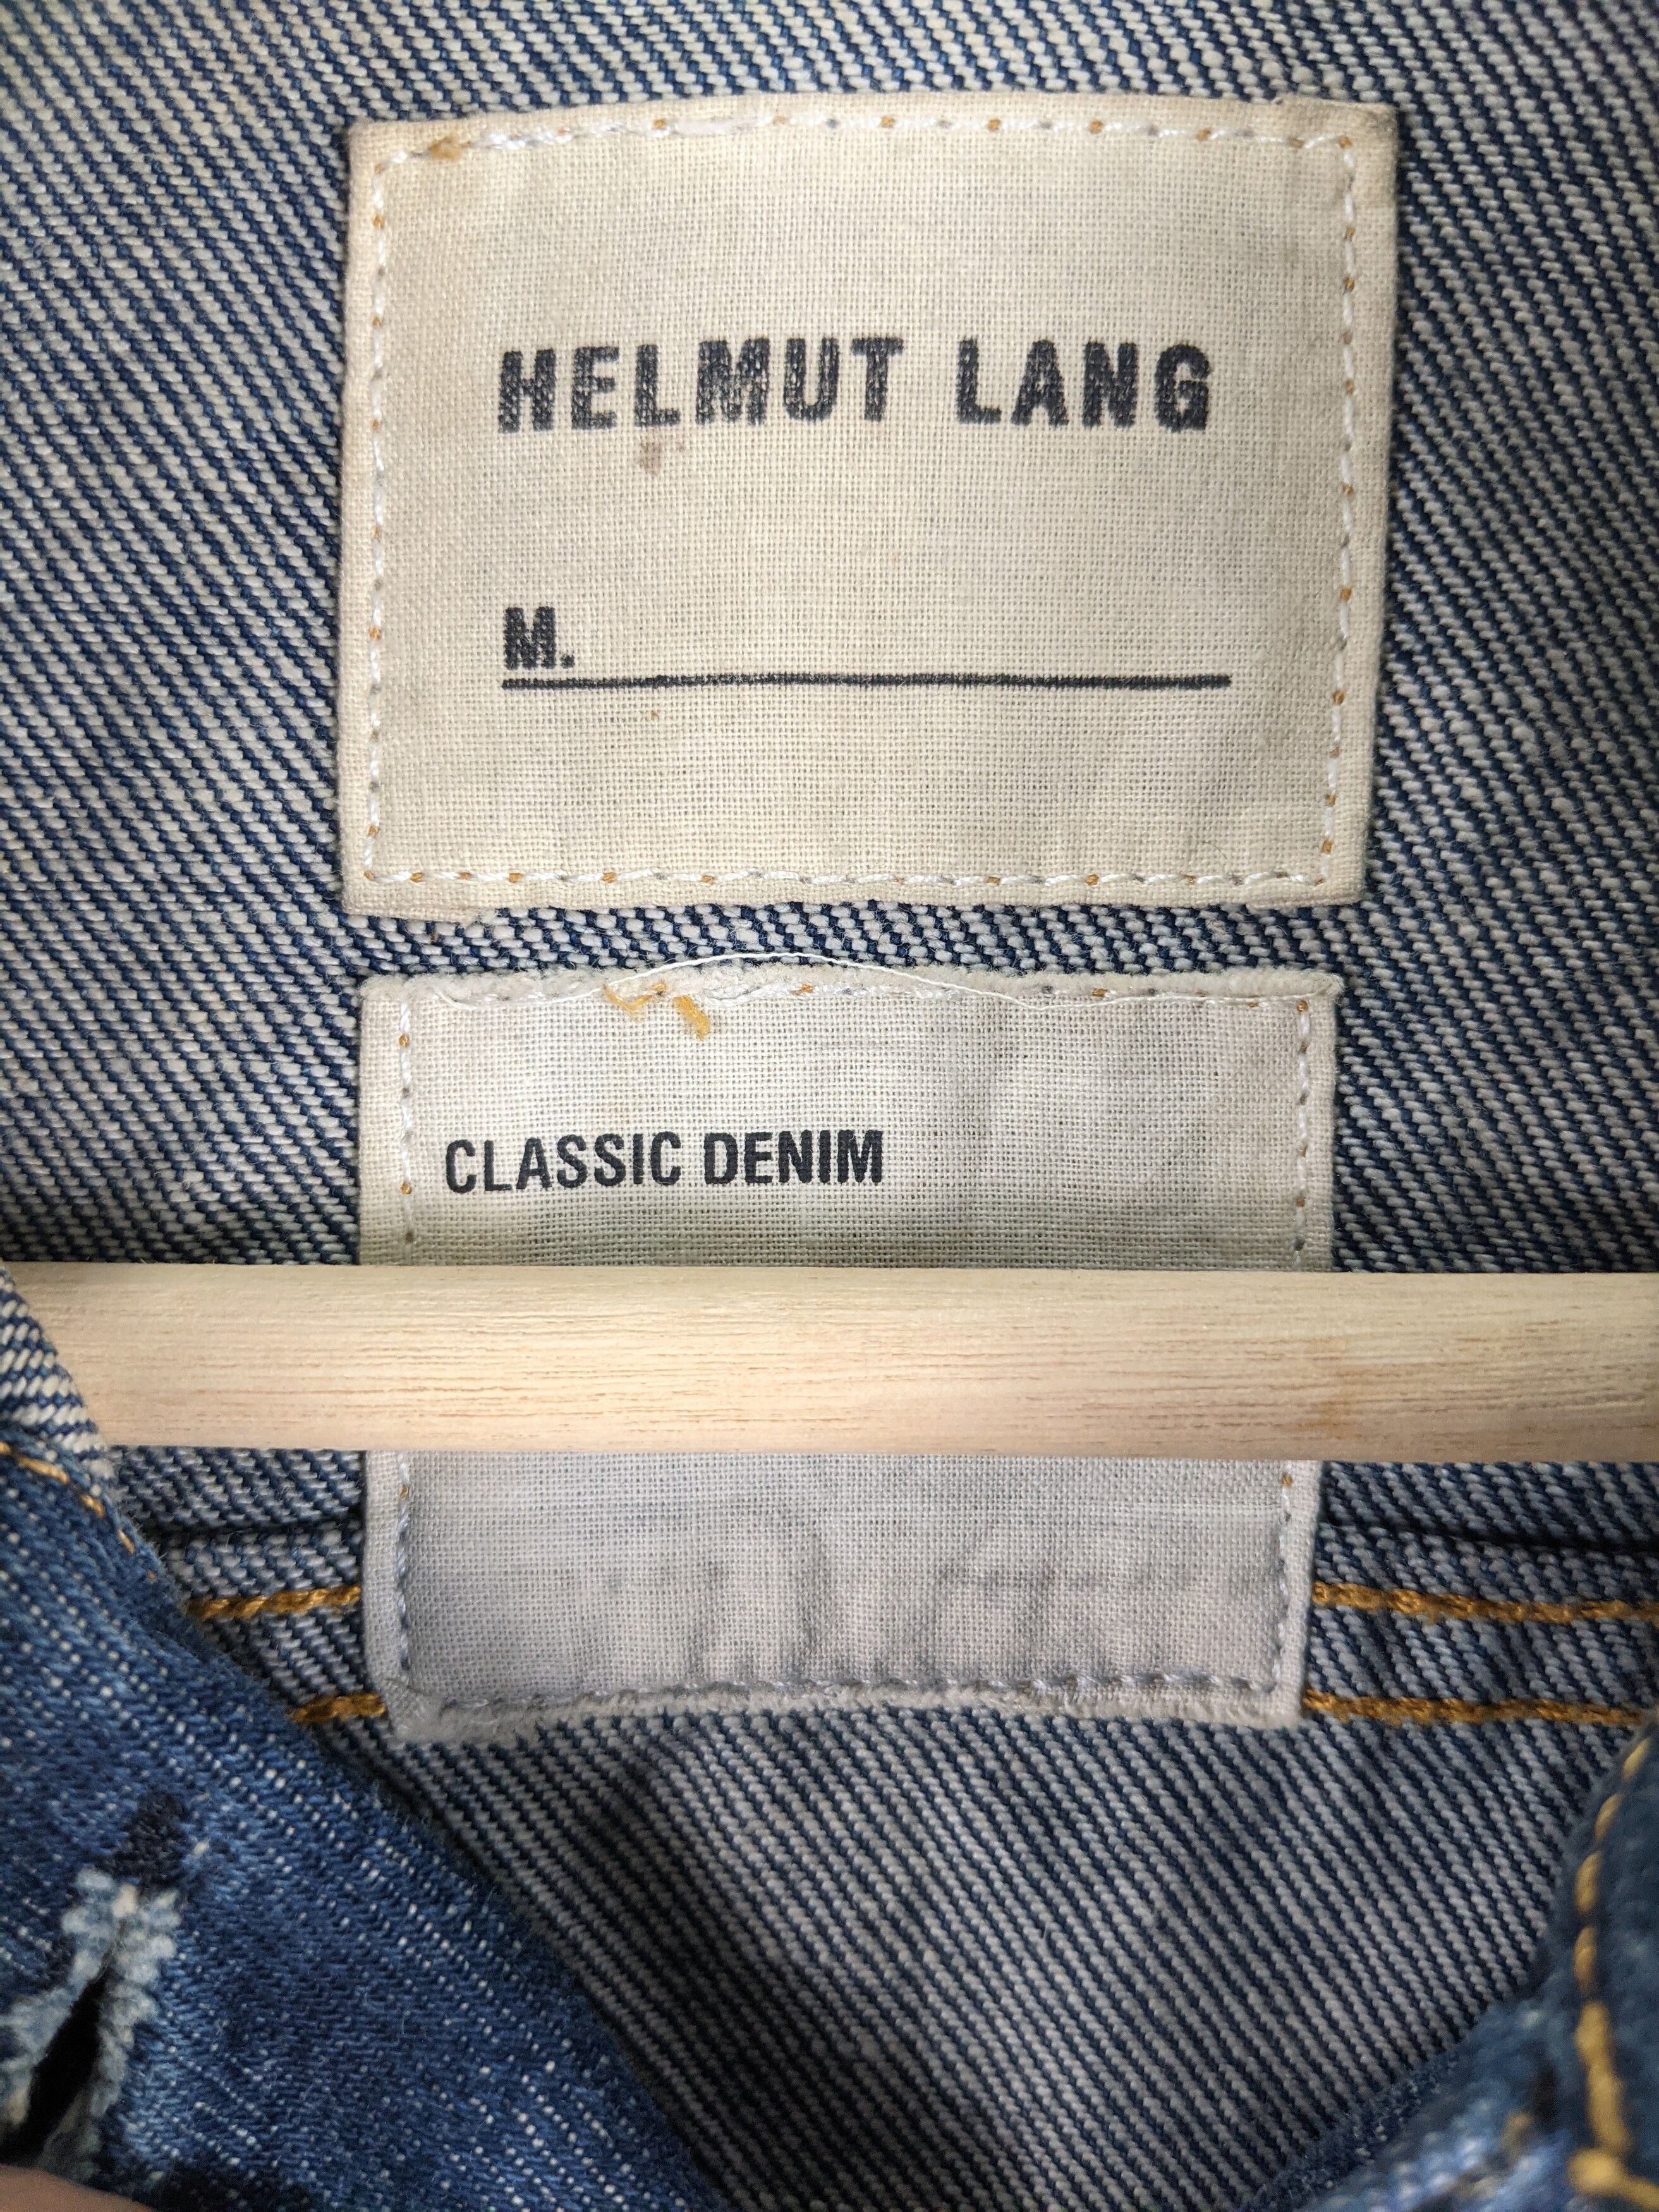 Helmut Lang Classic Denim Jeans Trucker Jacket - 4